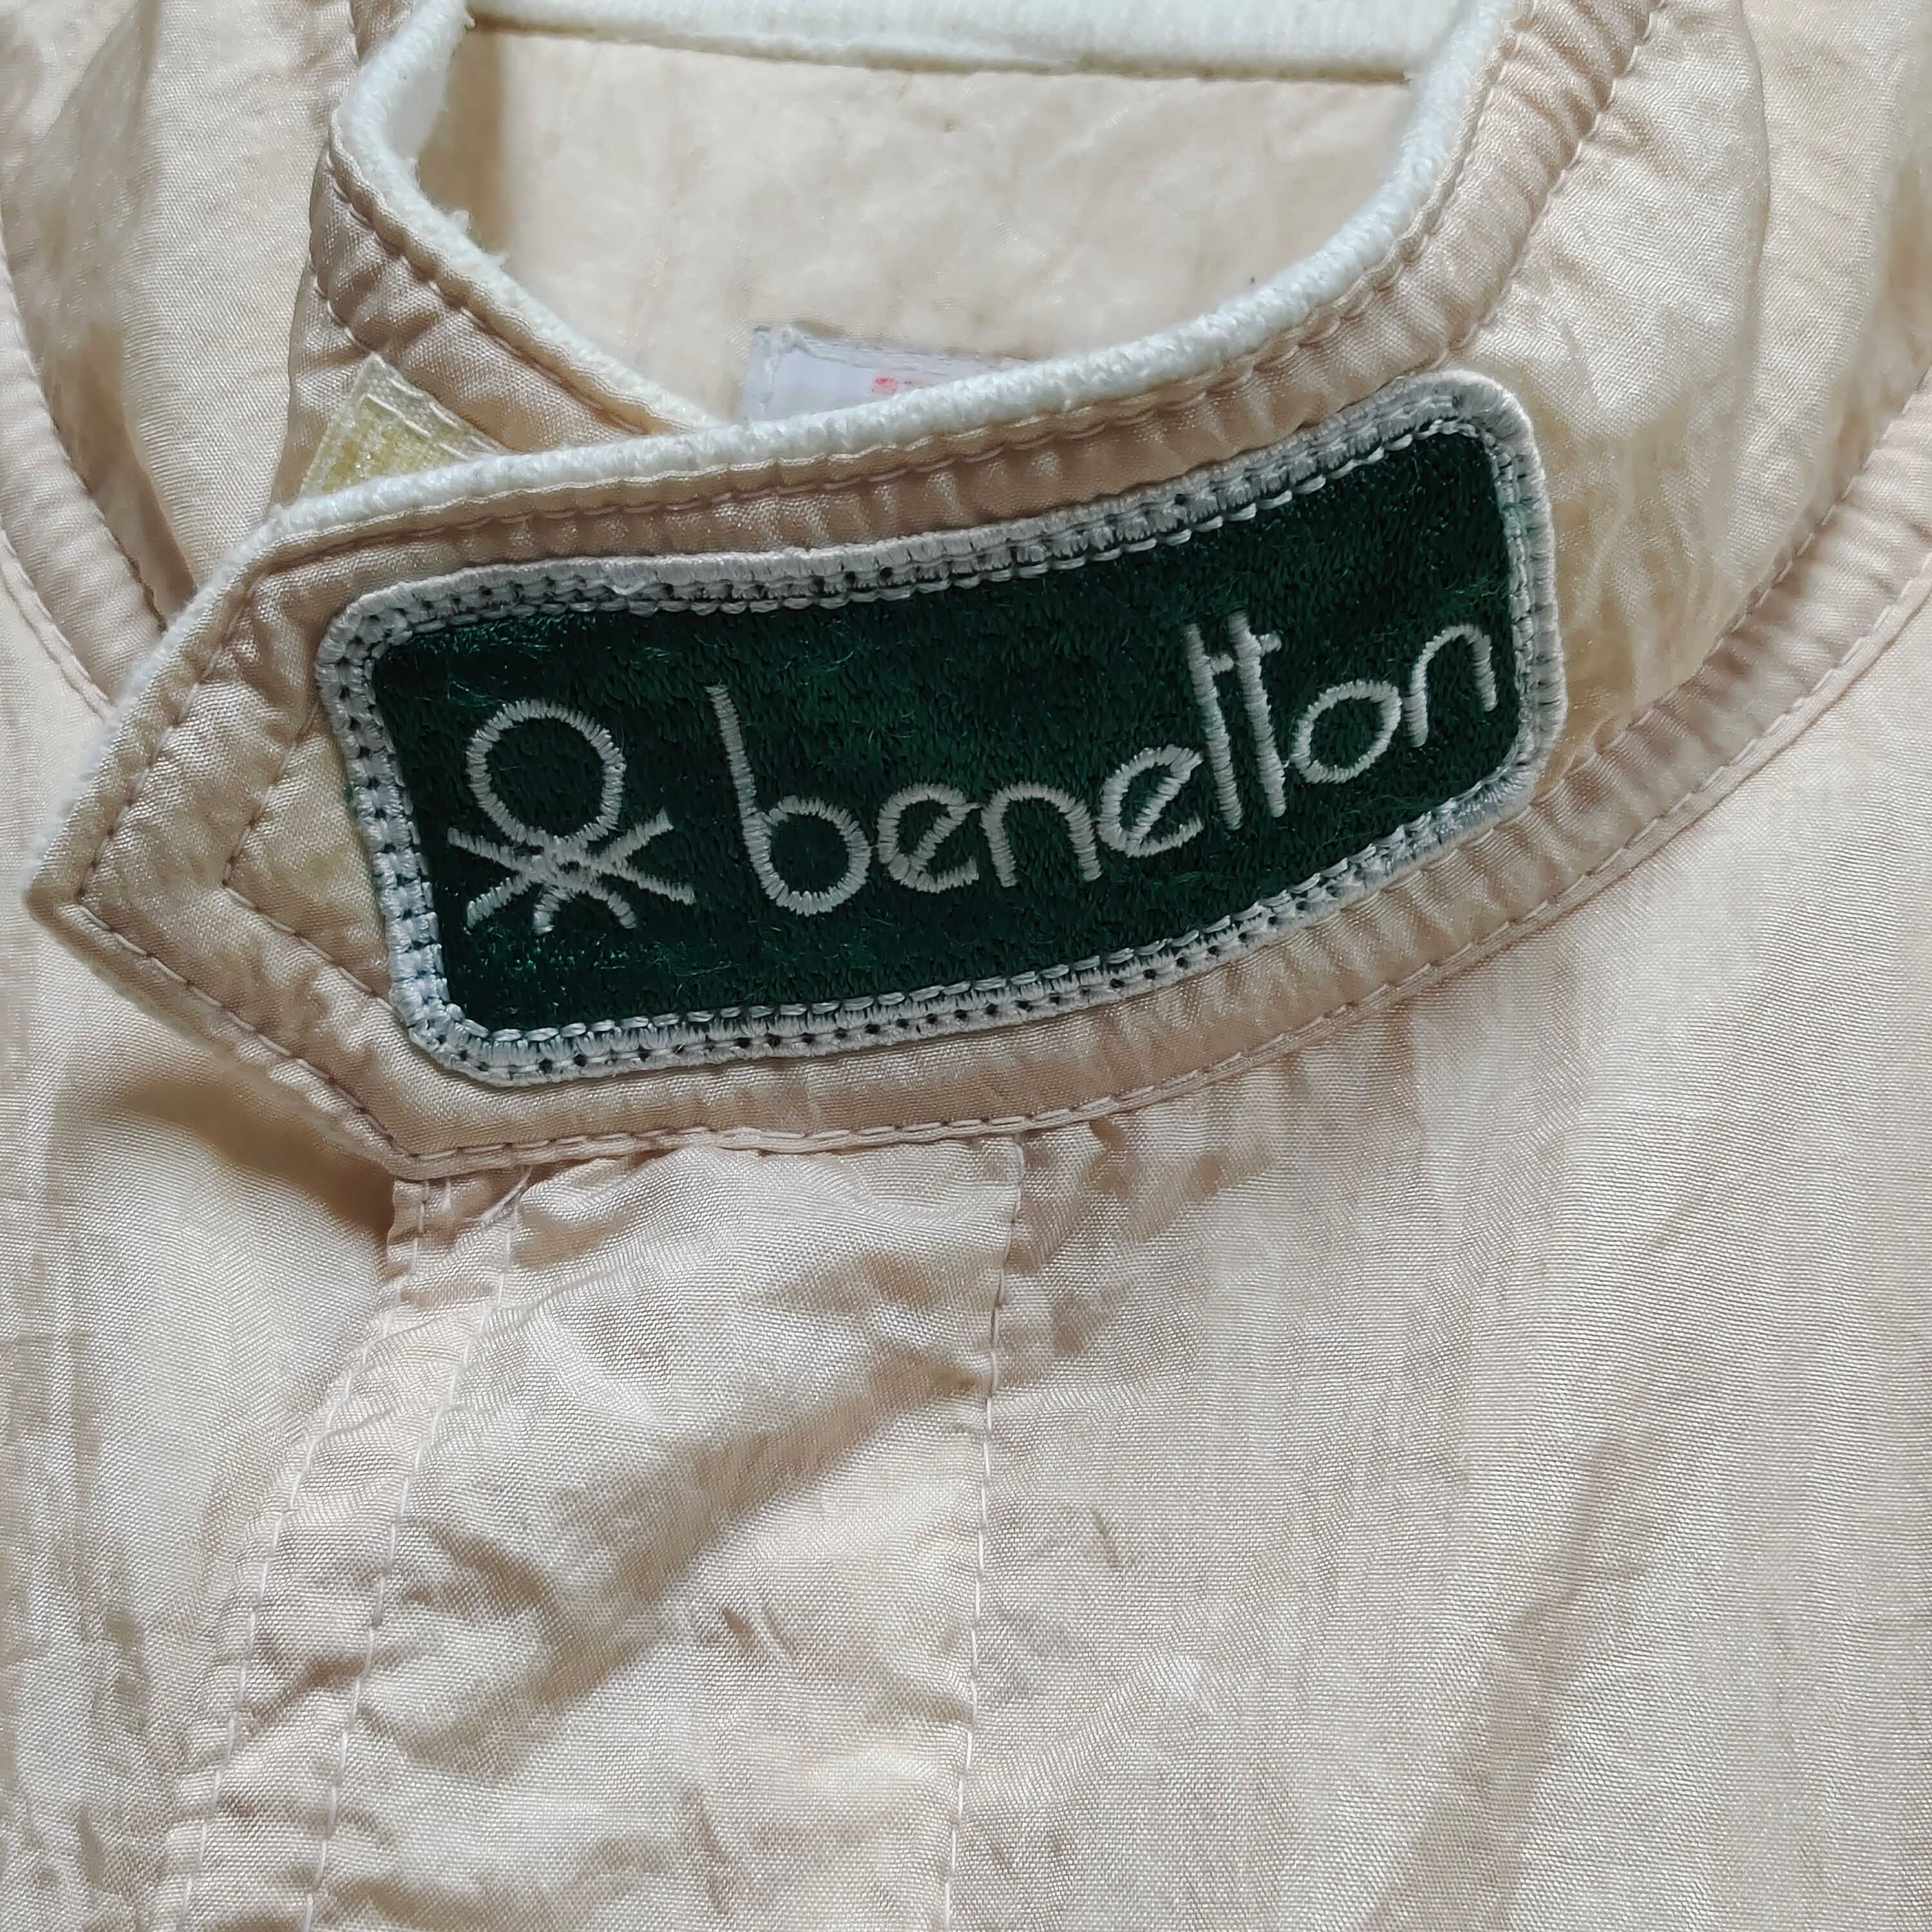 Vintage Vintage Benetton Formula 1 Light Jacket Size US M / EU 48-50 / 2 - 4 Thumbnail